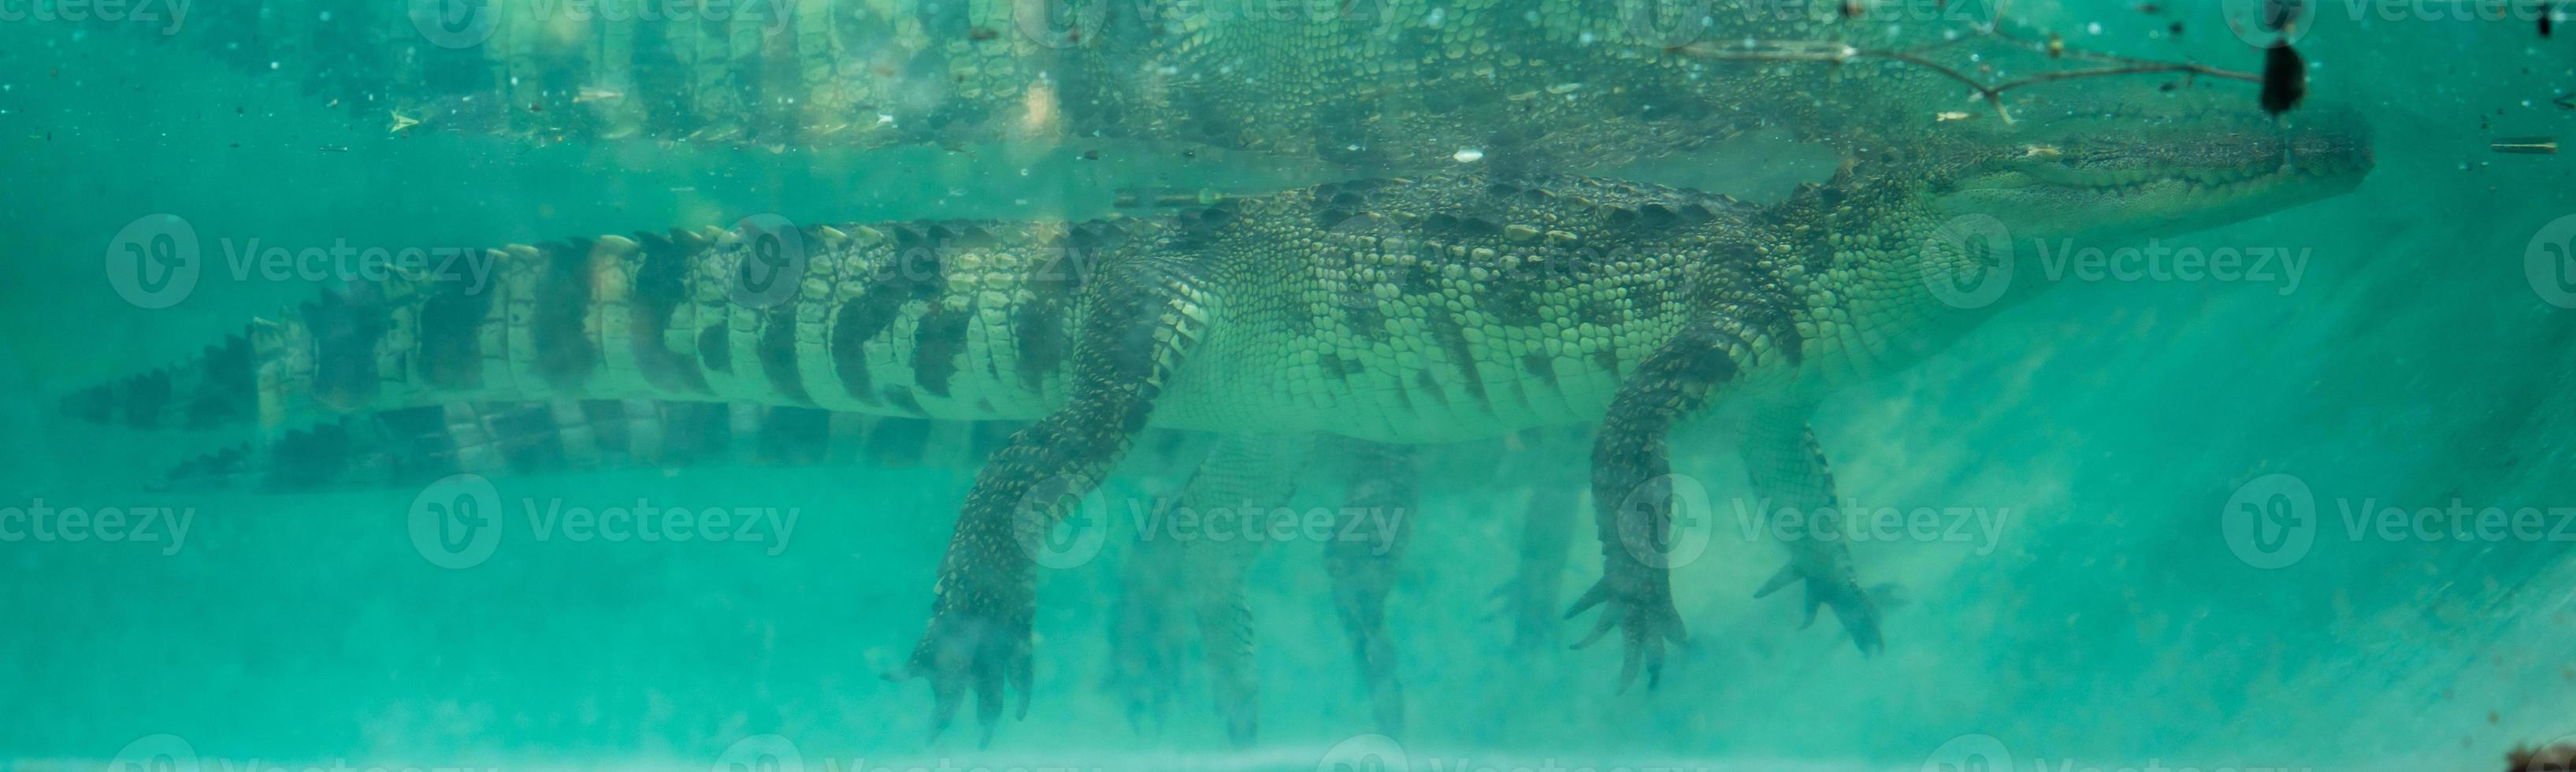 crocodilo debaixo d'água foto